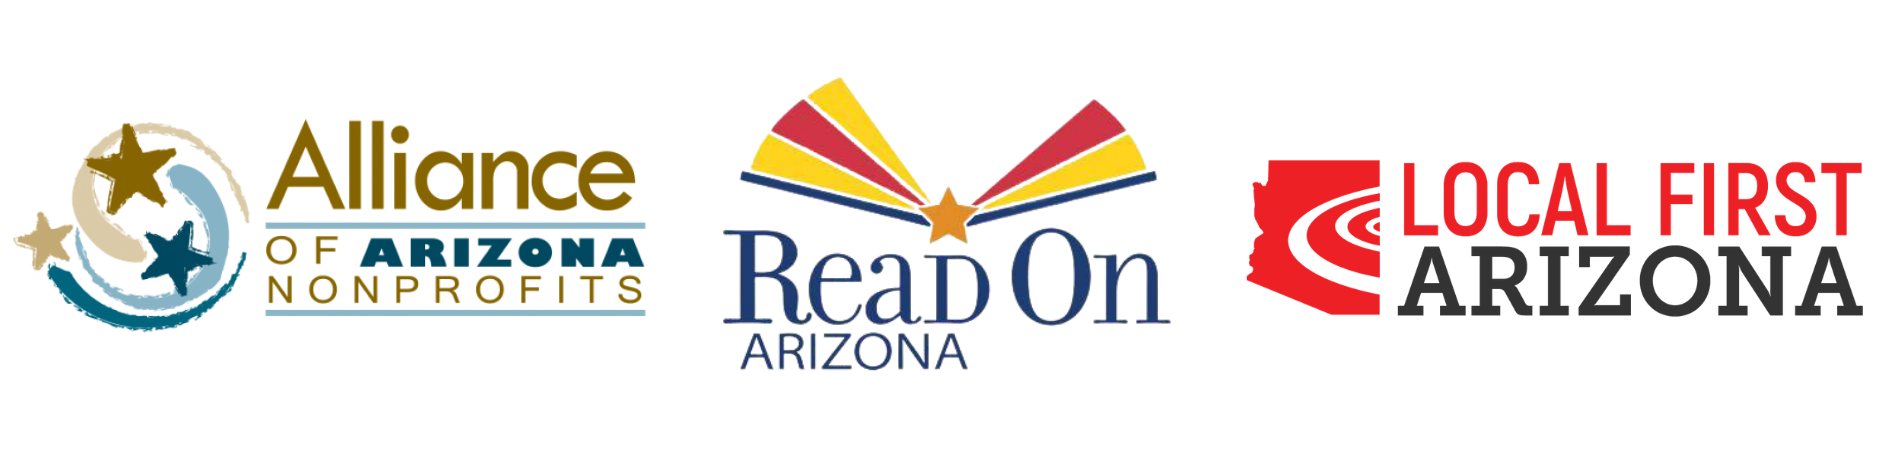 Alliance of AZ Nonprofits logo, Read On Arizona logo, and Local First AZ logo